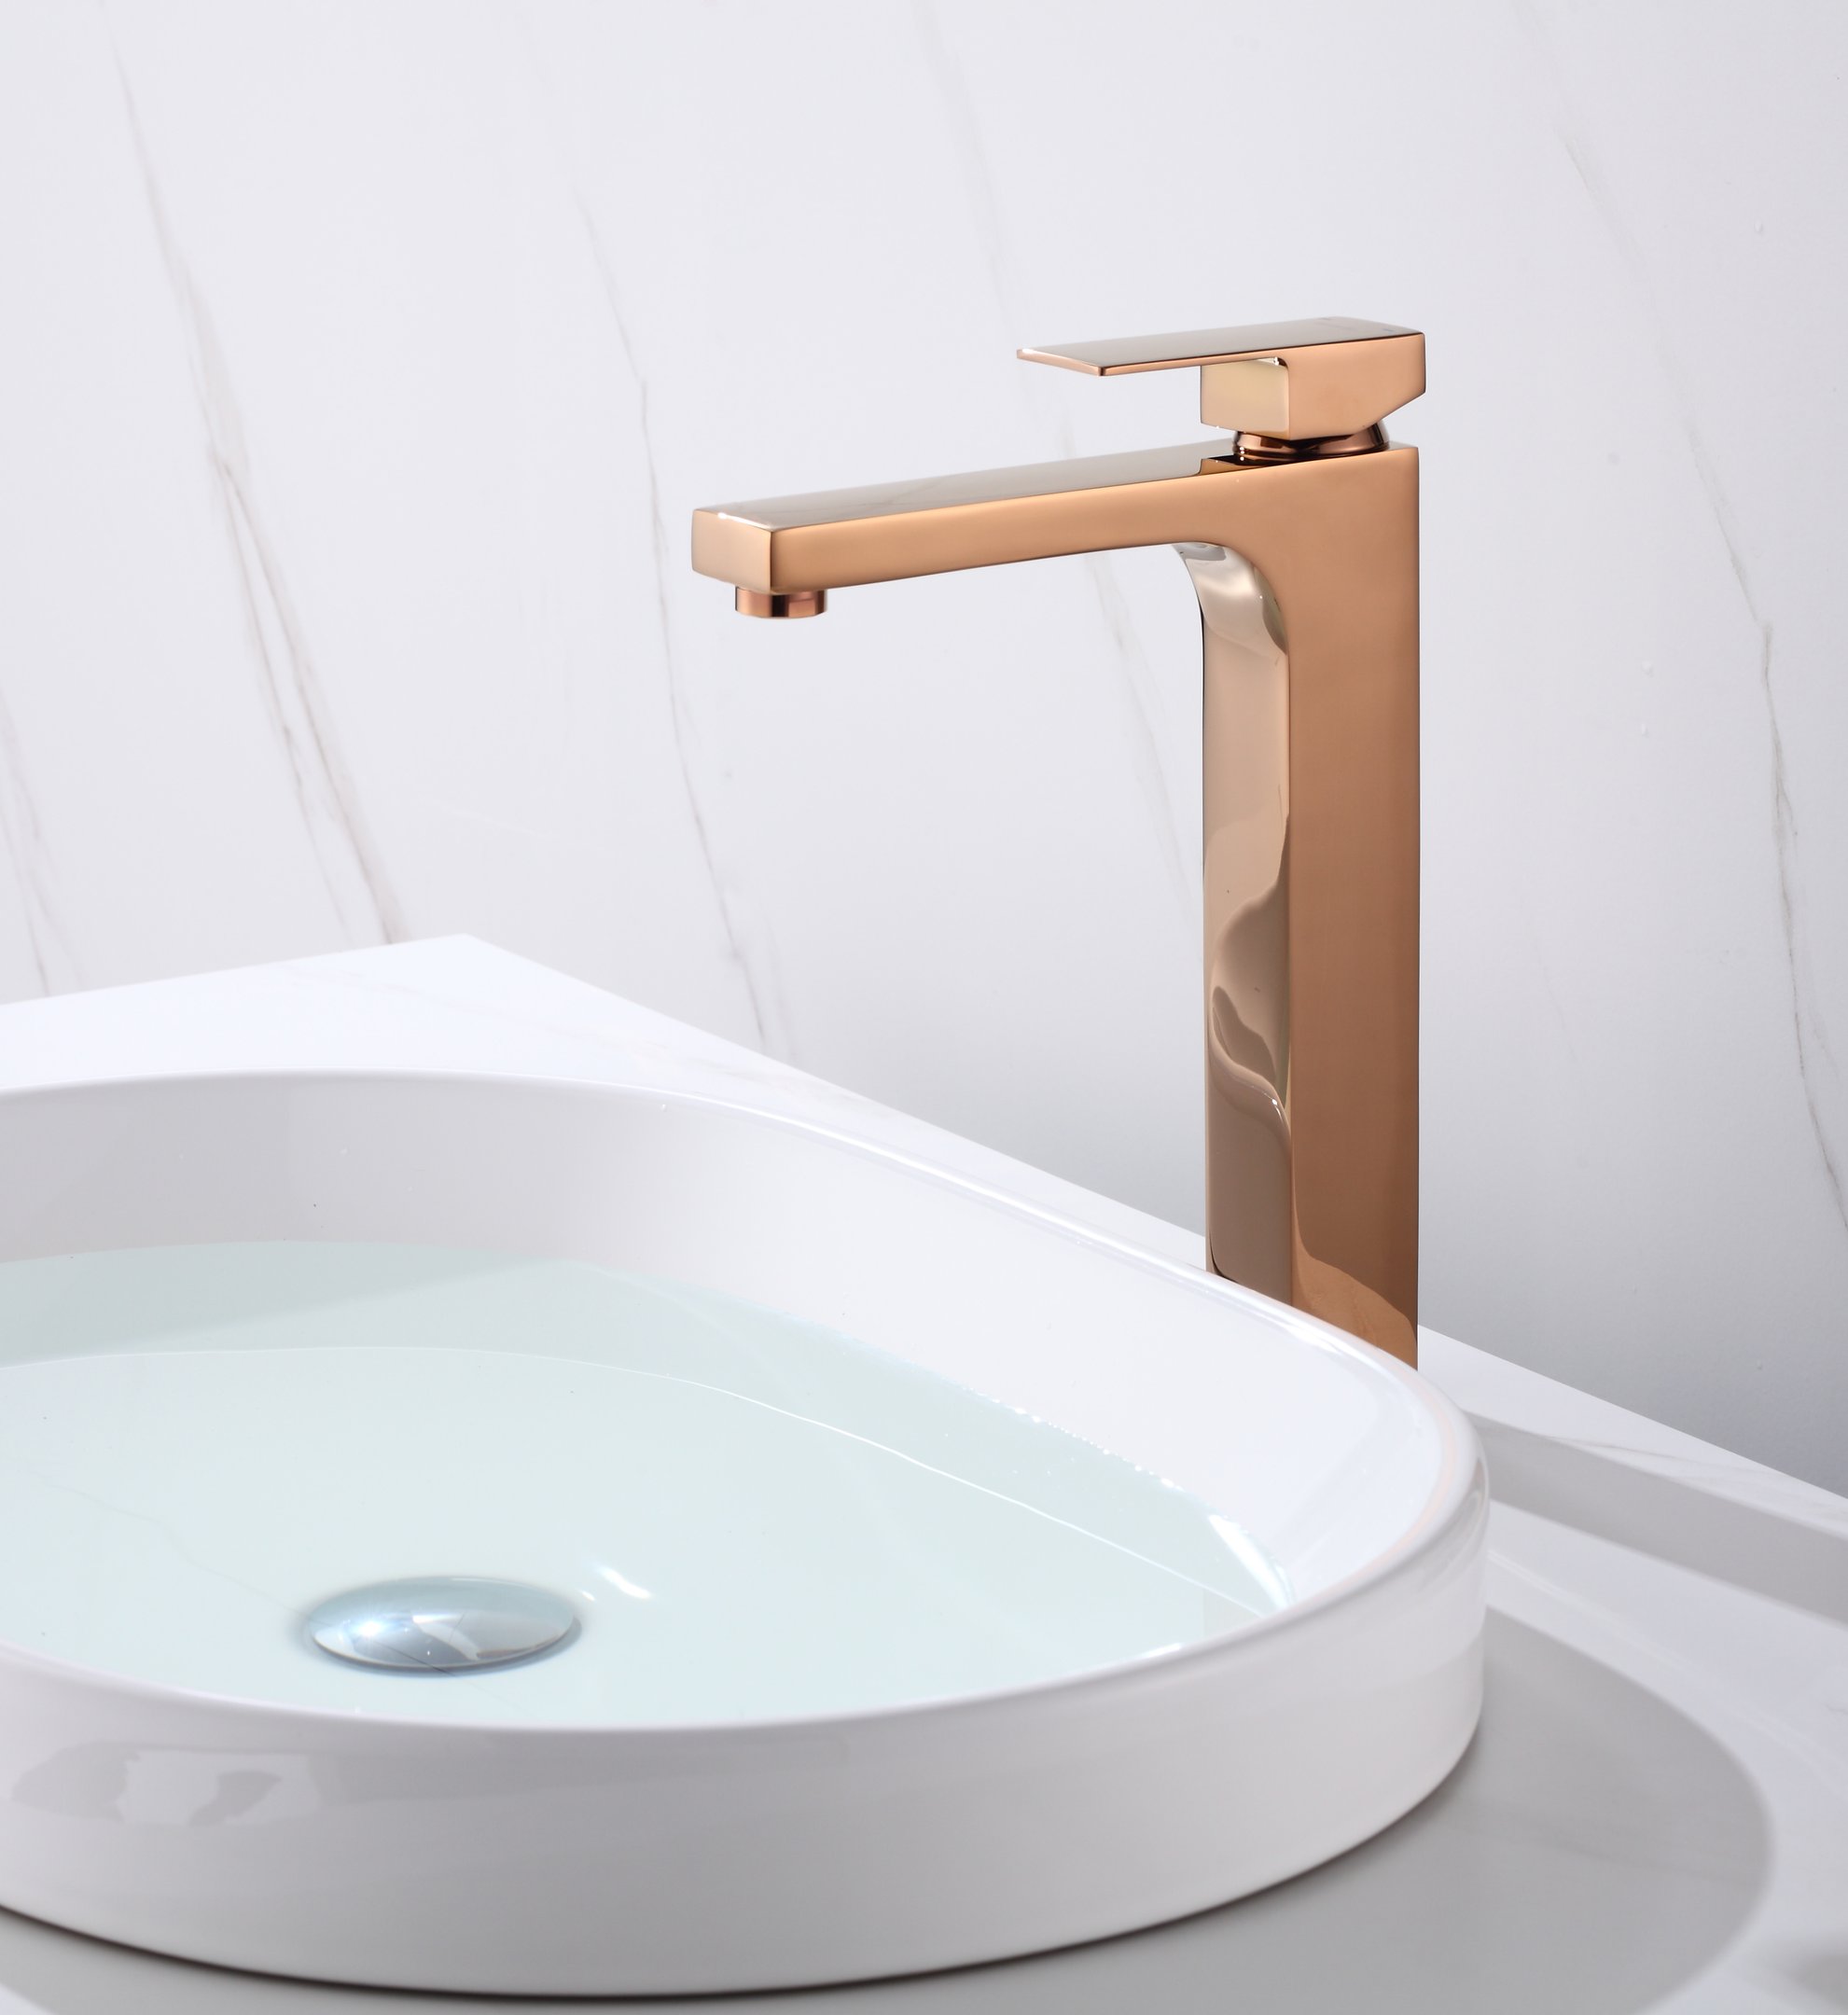 Torneira Monocomando Rose Gold Quadrada Banheiro Lavabo Bica Alta Luxo Inovartte In50 - 3